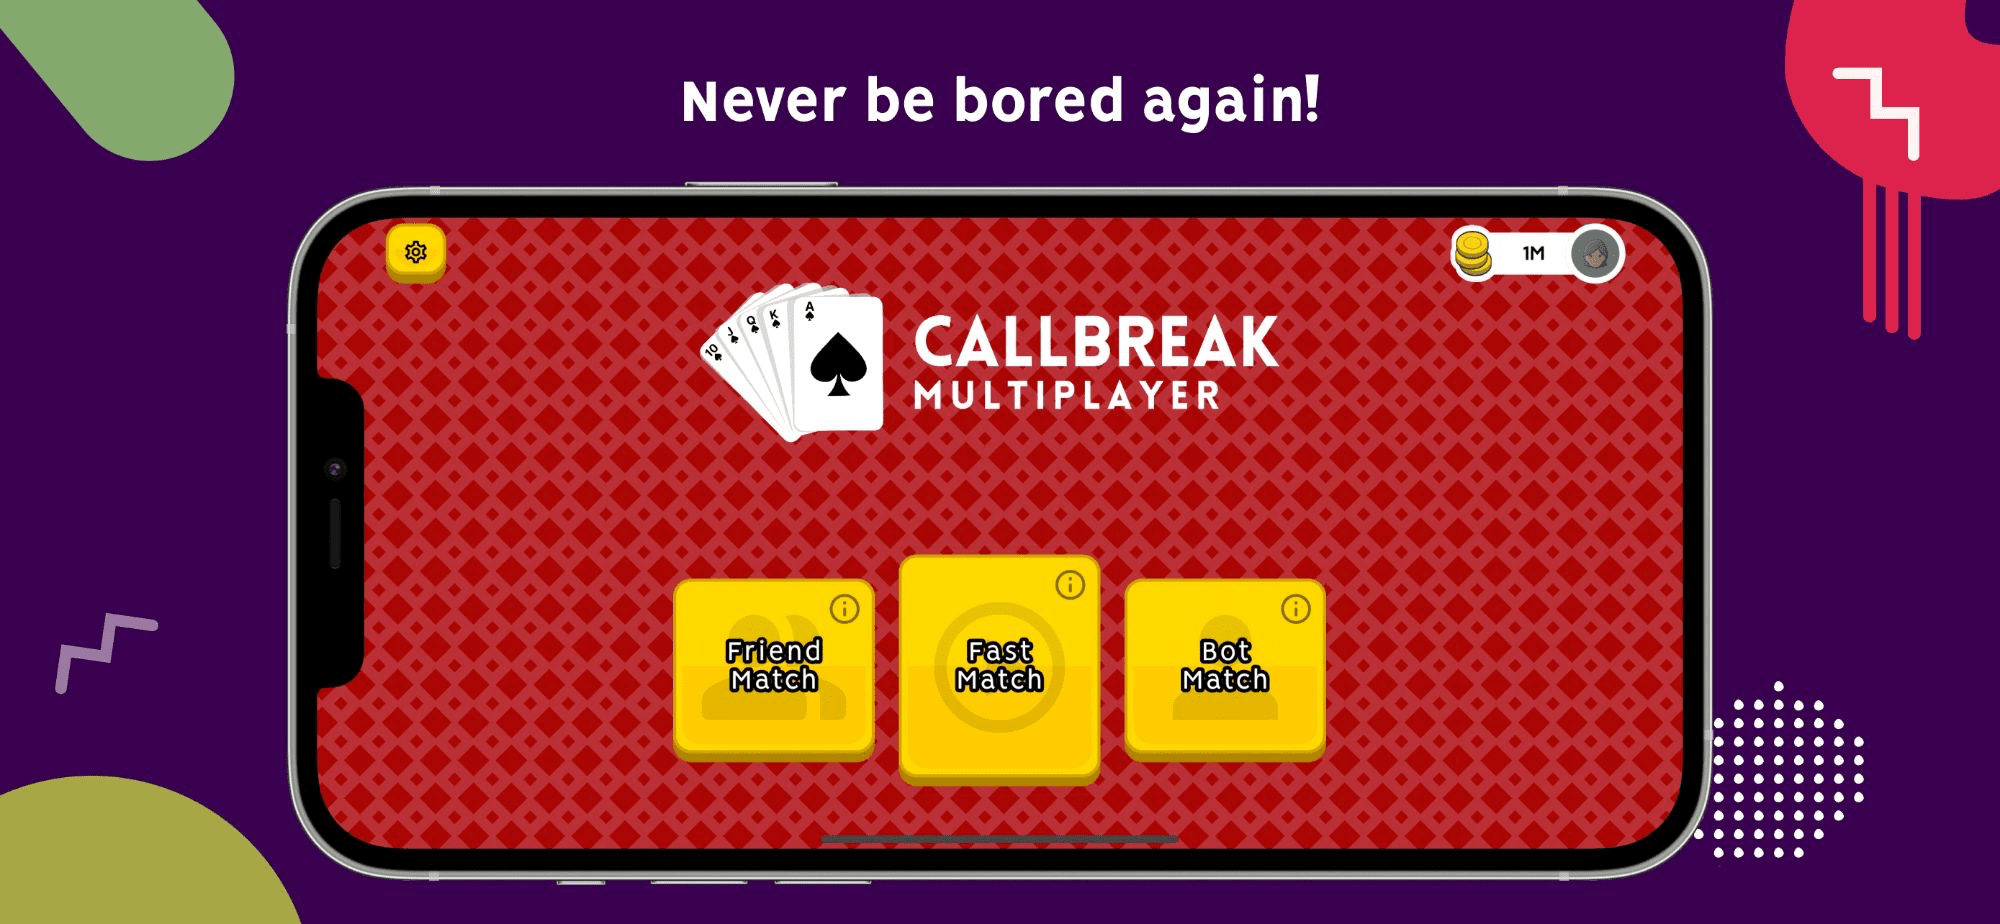 Callbreak Multiplayer App Home Page Screenshot